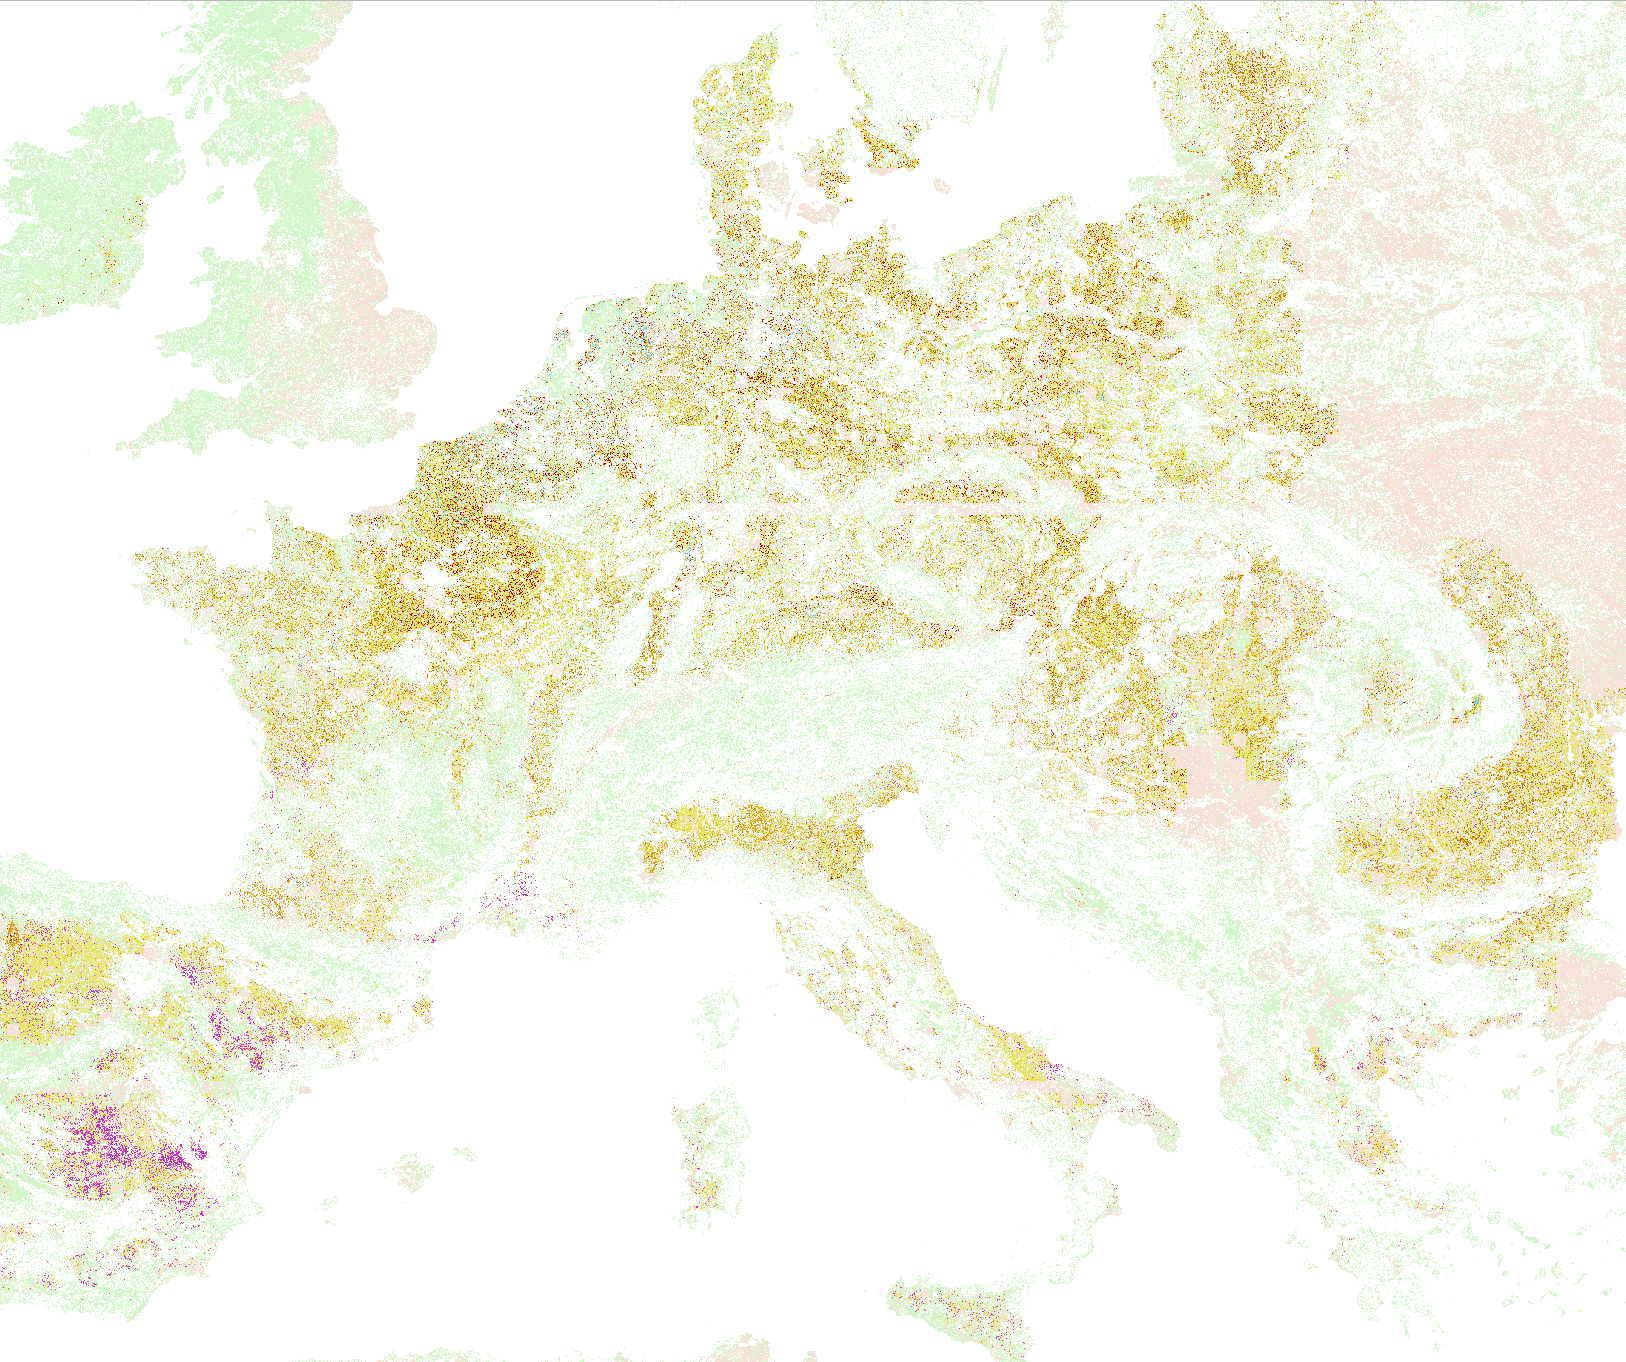 Crop type map for EU27